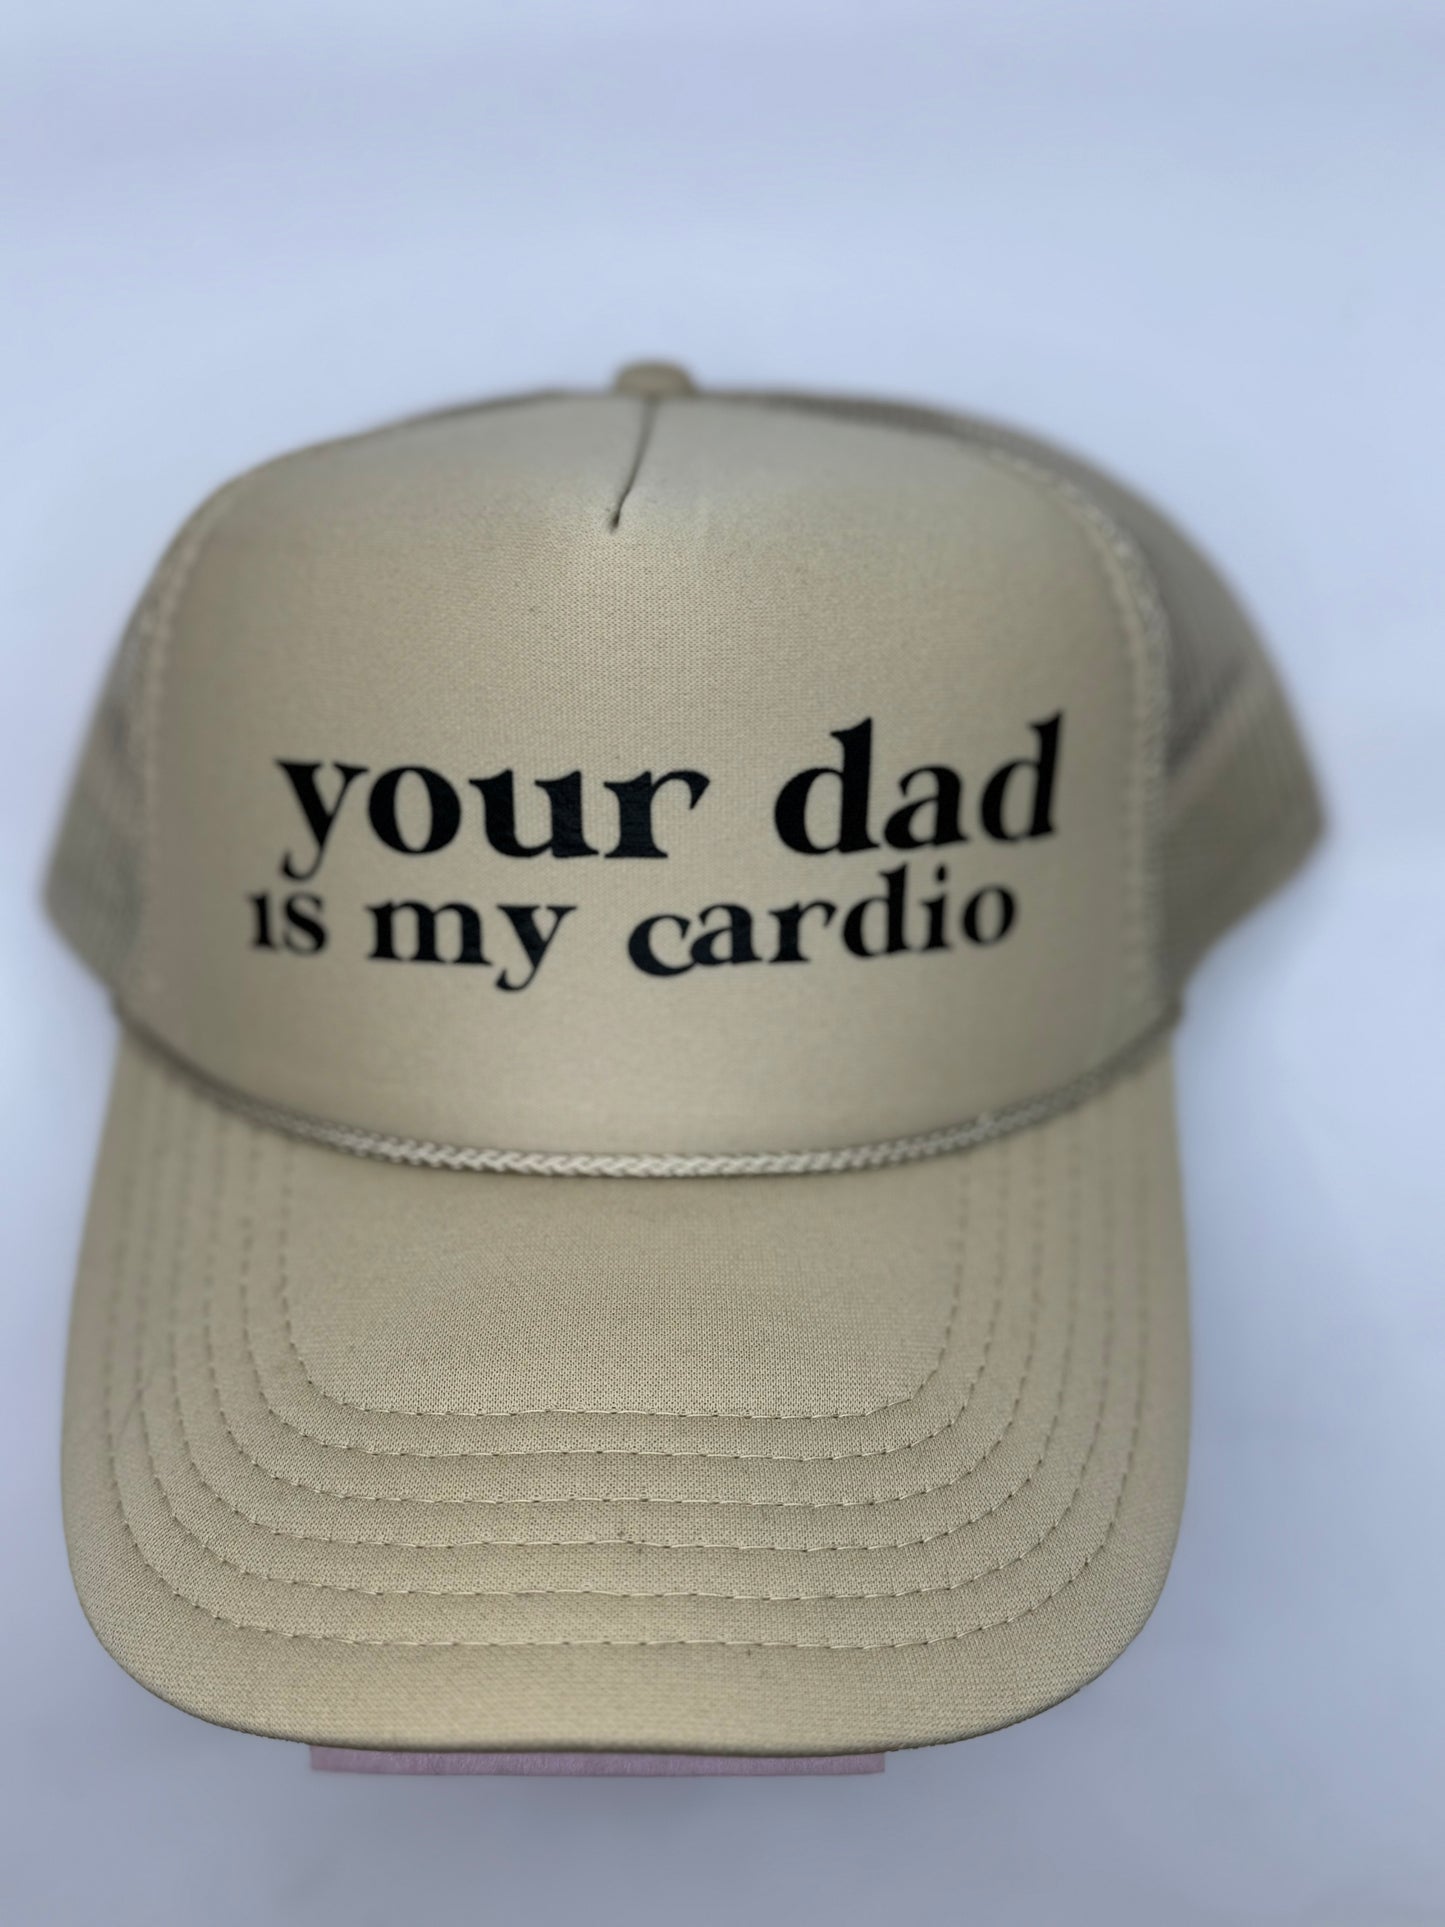 "your dad is my cardio" Trucker hat